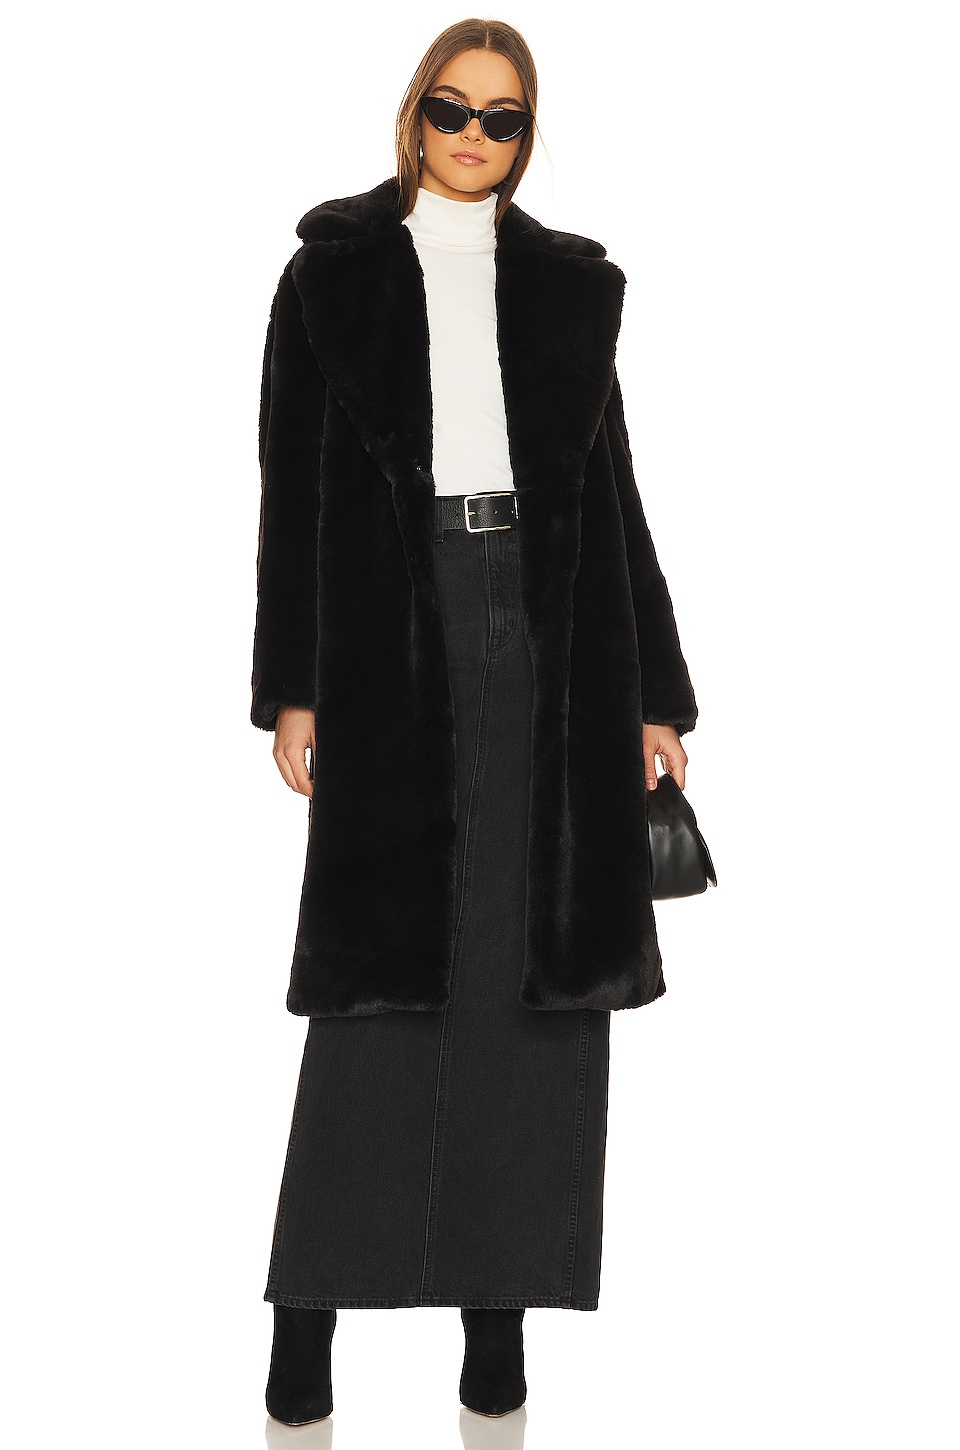 Apparis Mona 2 Faux Fur Coat in Noir | REVOLVE